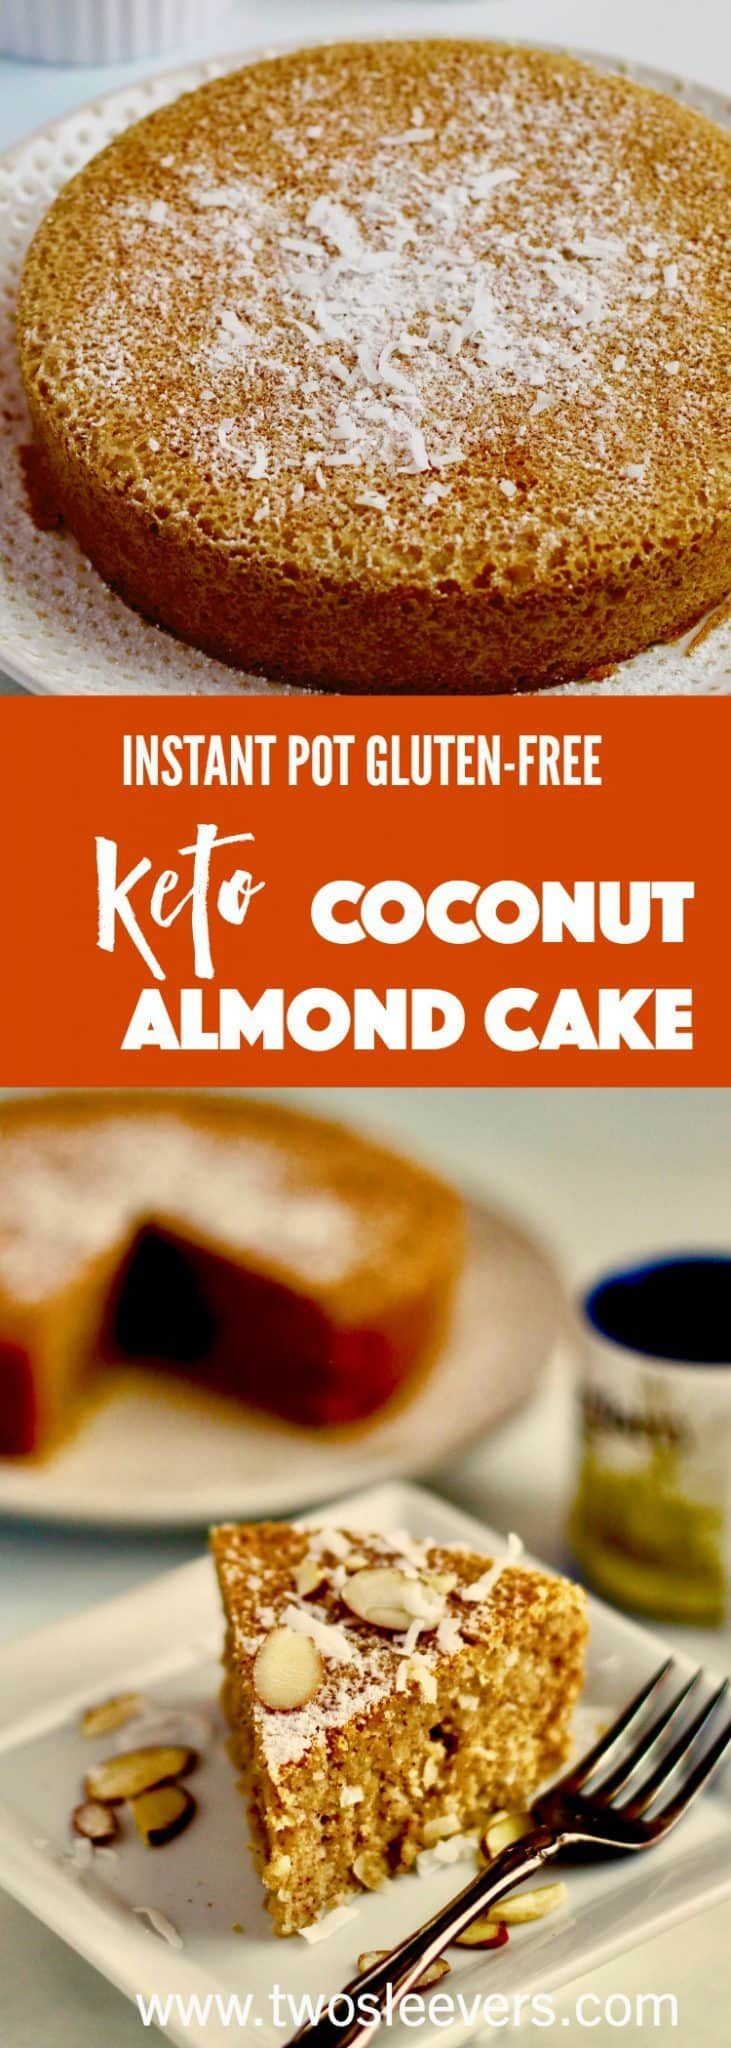 Instant Pot Keto Cake
 Instant Pot Keto Gluten Free Almond Coconut cake packs all